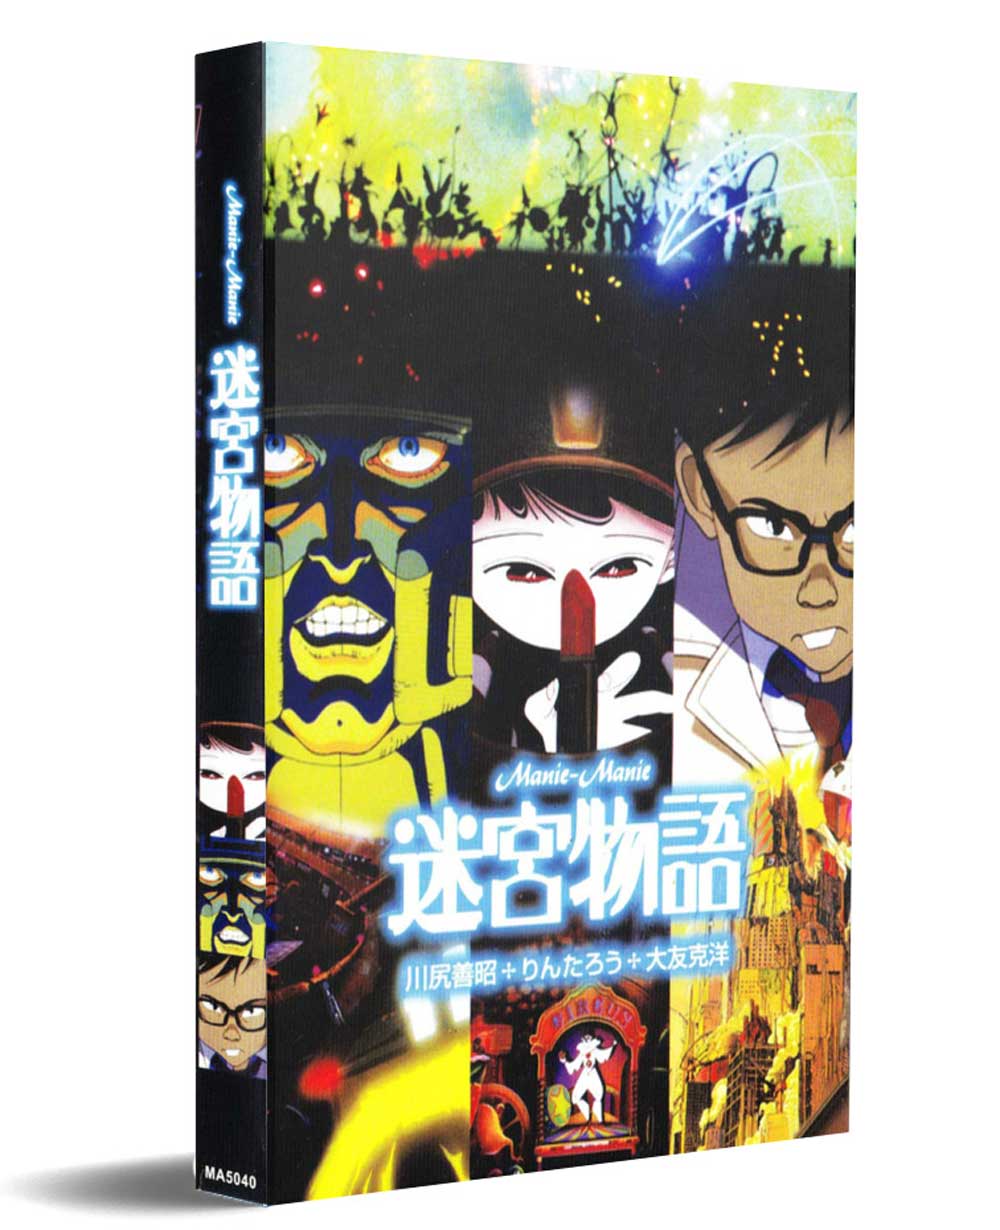 Manie-Manie: Meikyuu Monogatari (DVD) (1987) Anime